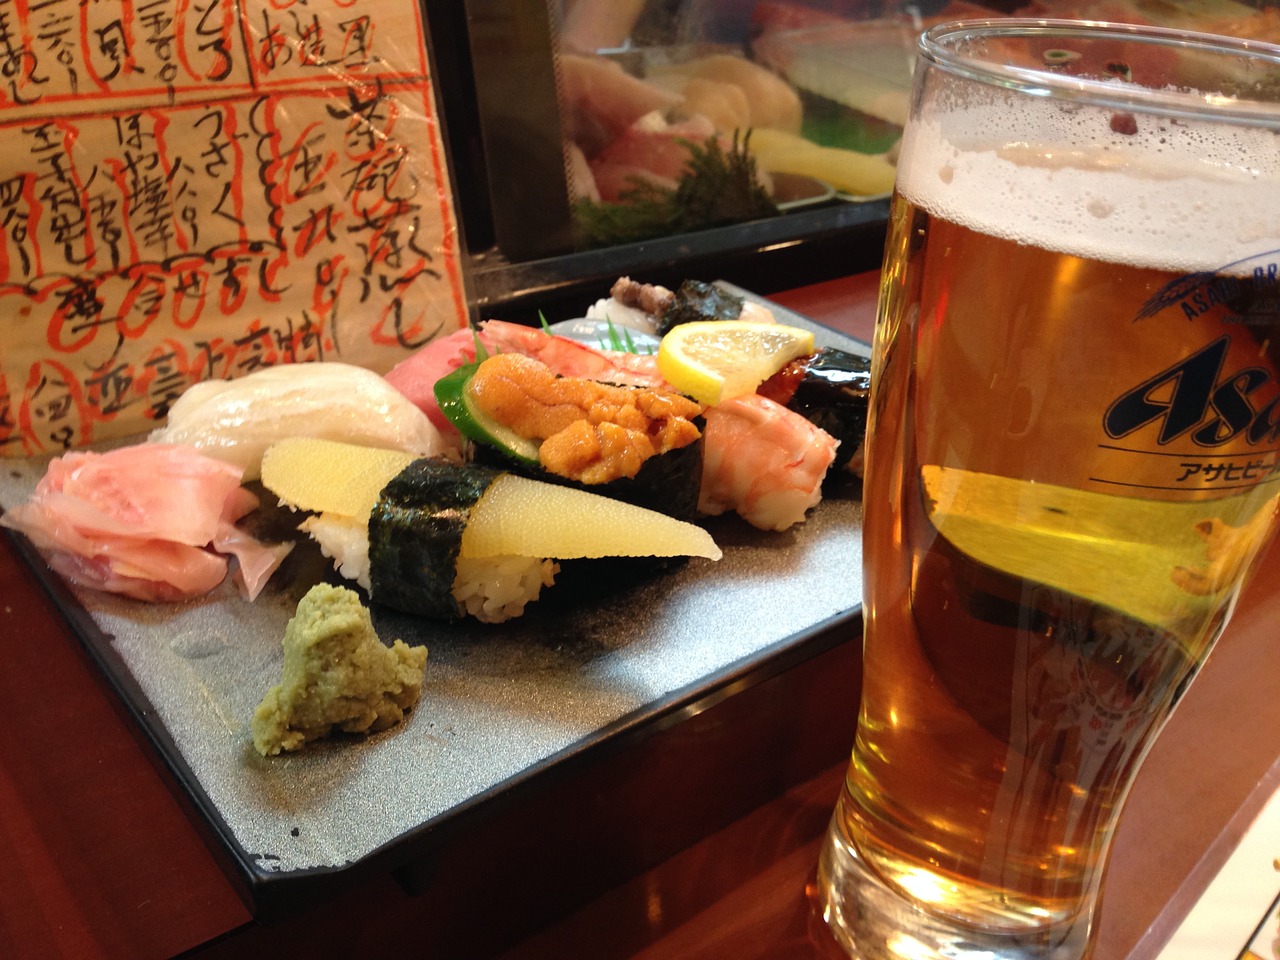 Japanese beer exports to Korea reach zero amidst trade war